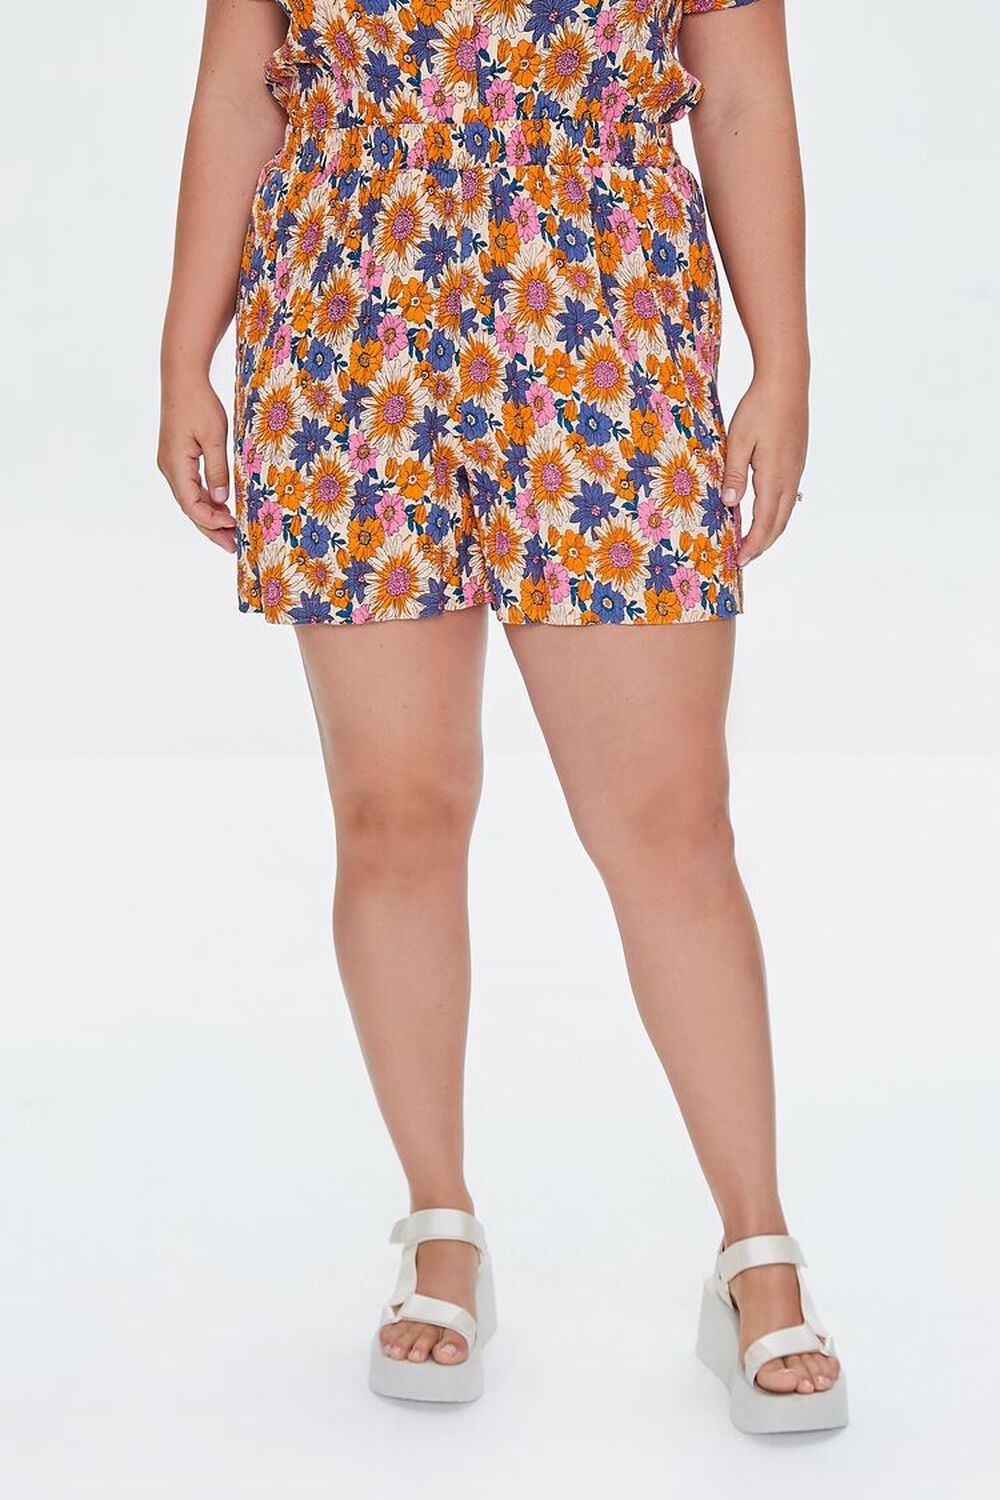 ORANGE/MULTI Plus Size Floral Print Shorts, image 2